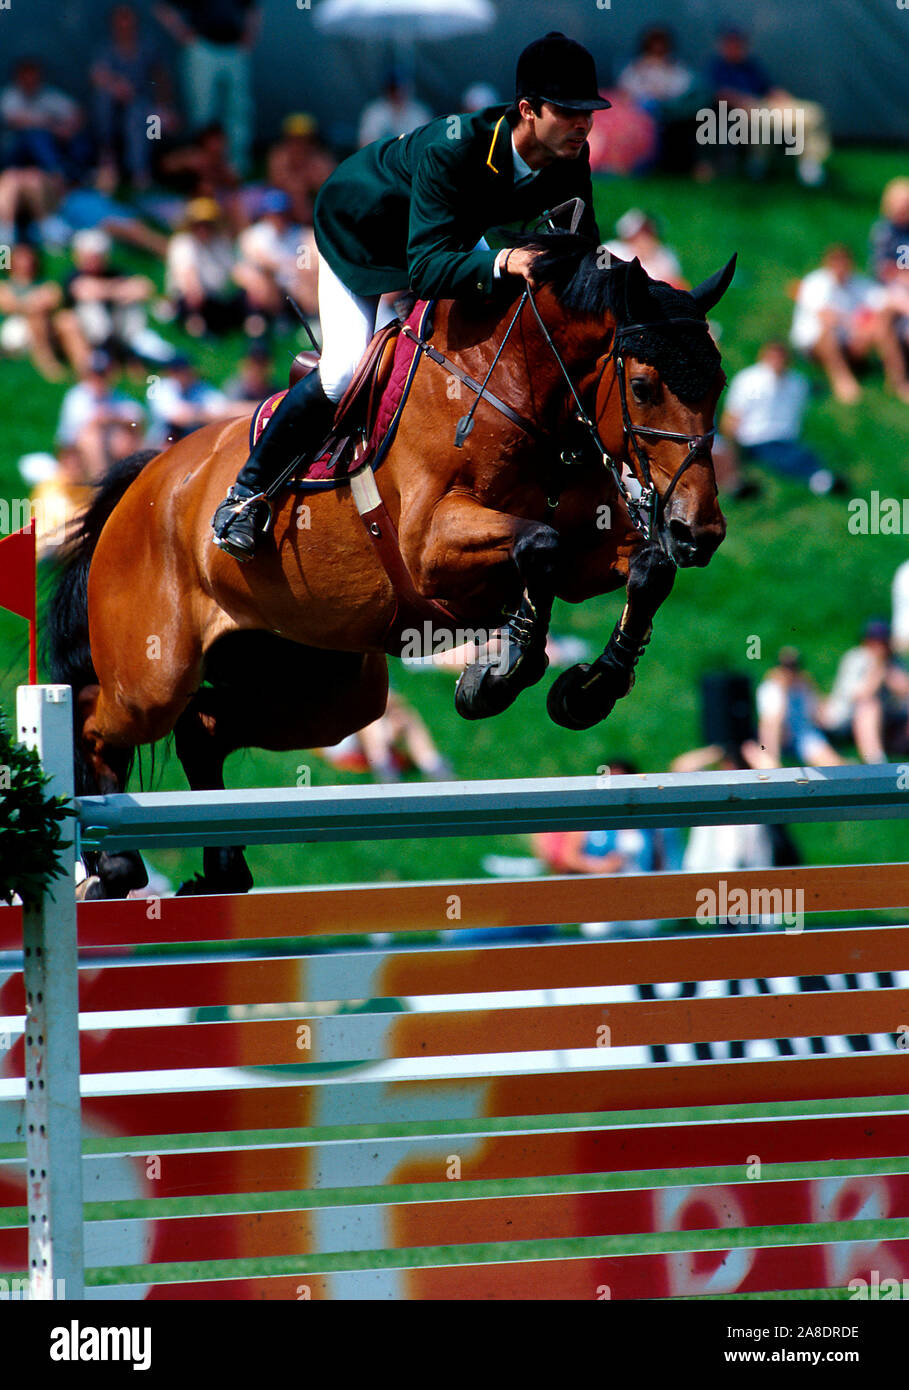 CSIO St. Gallen, May 1999 Rodrigo Pessoa (BRA) riding Gandini Lianos Stock  Photo - Alamy